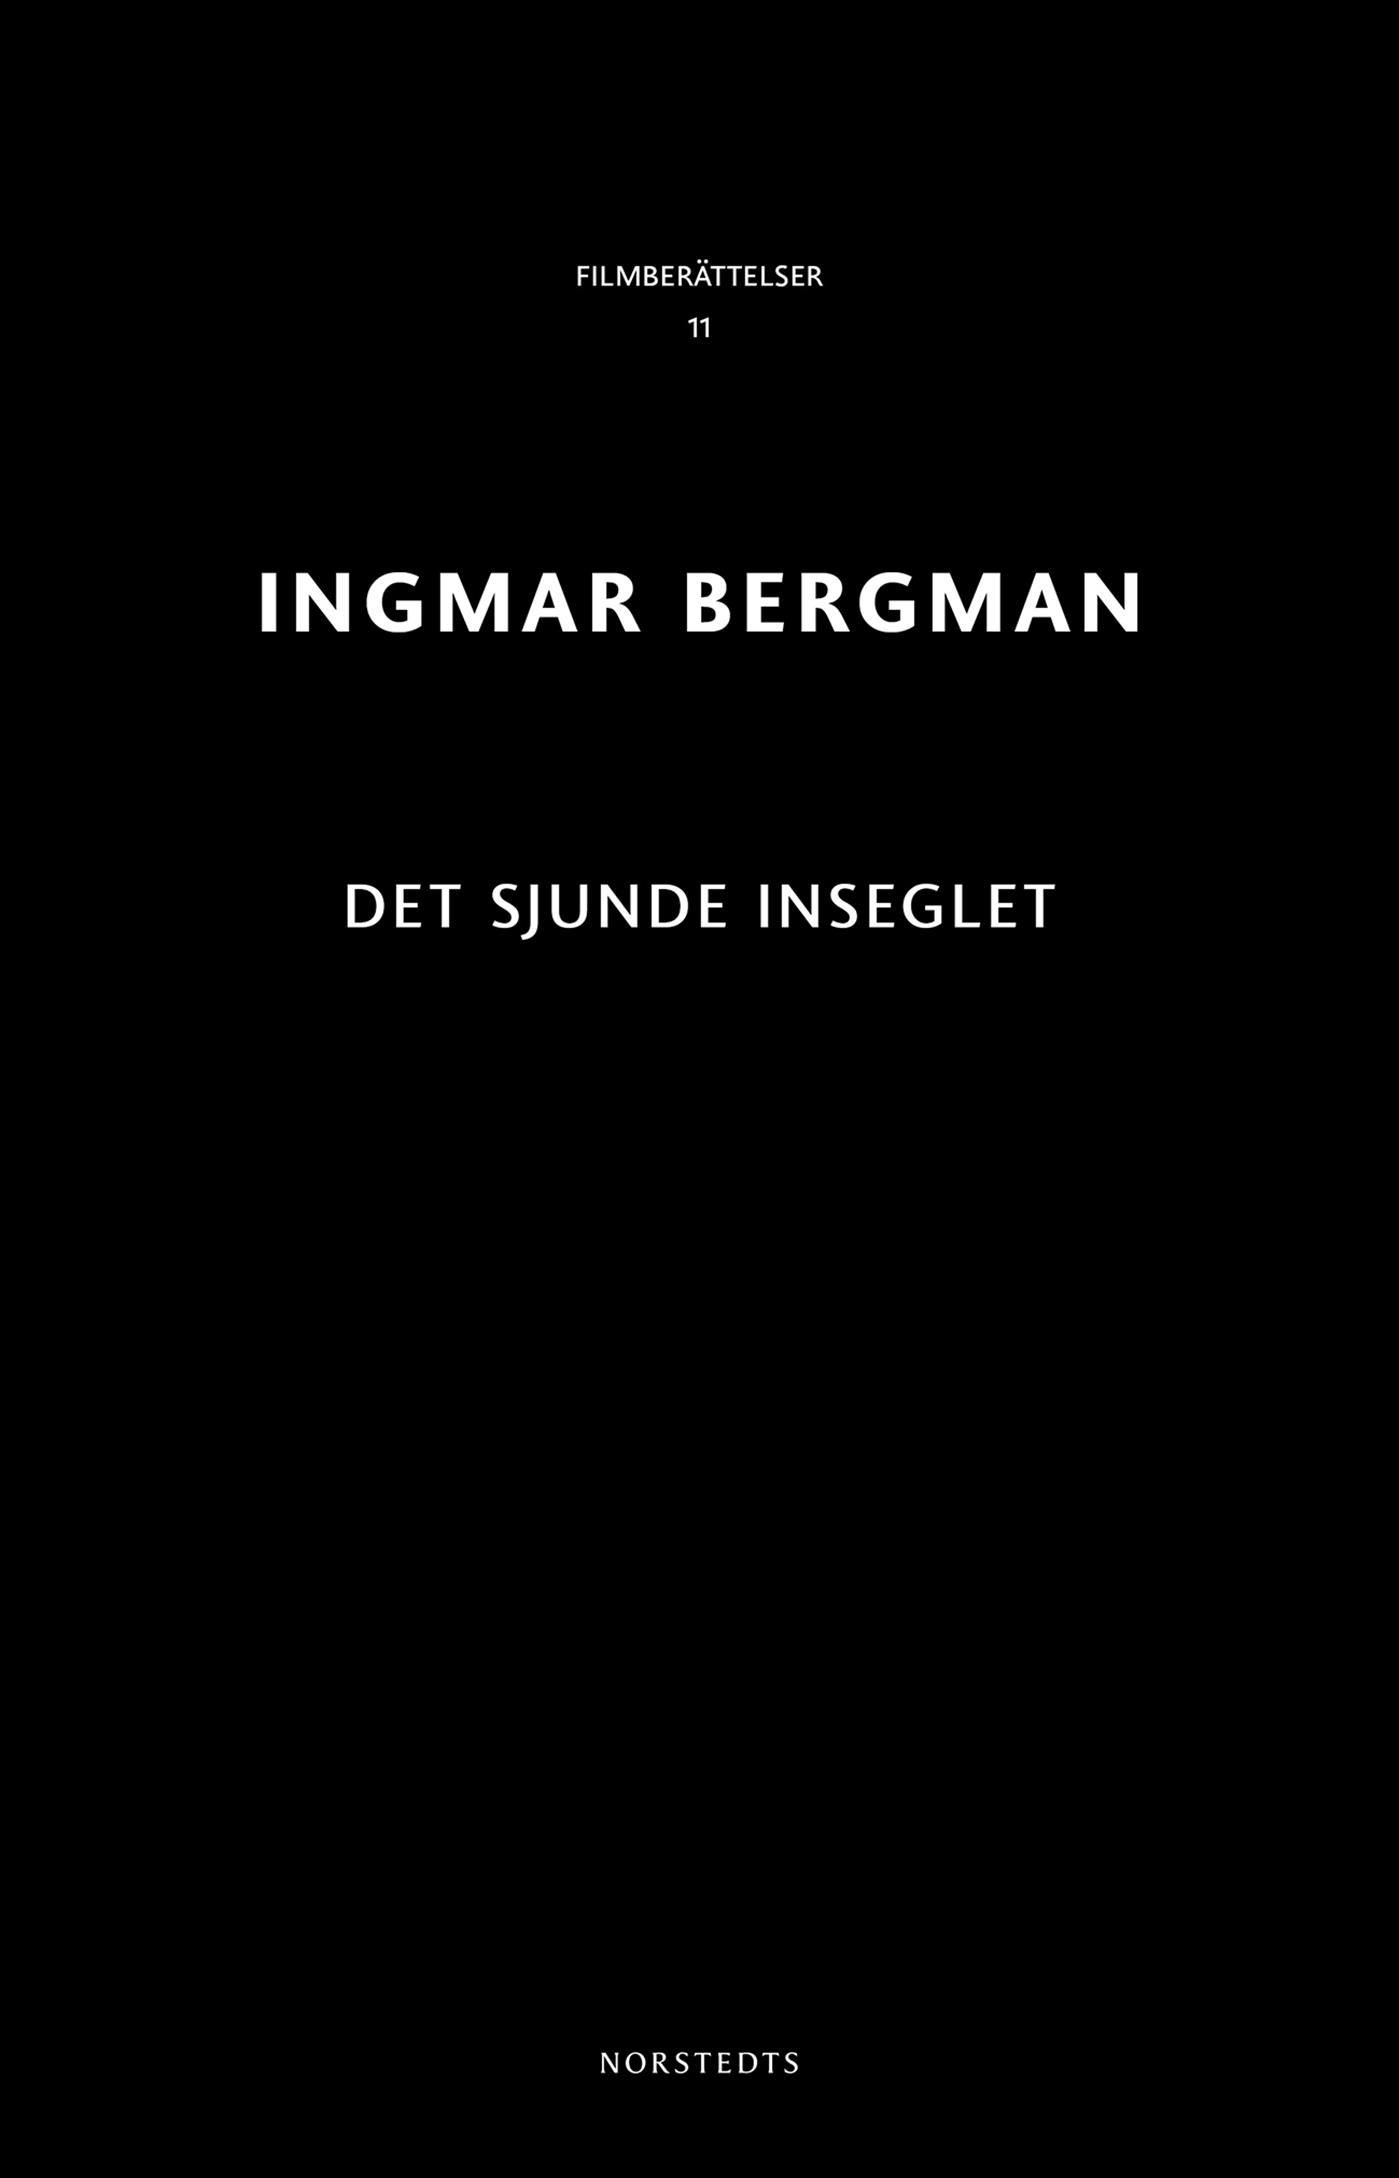 Det sjunde inseglet - Ingmar Bergman